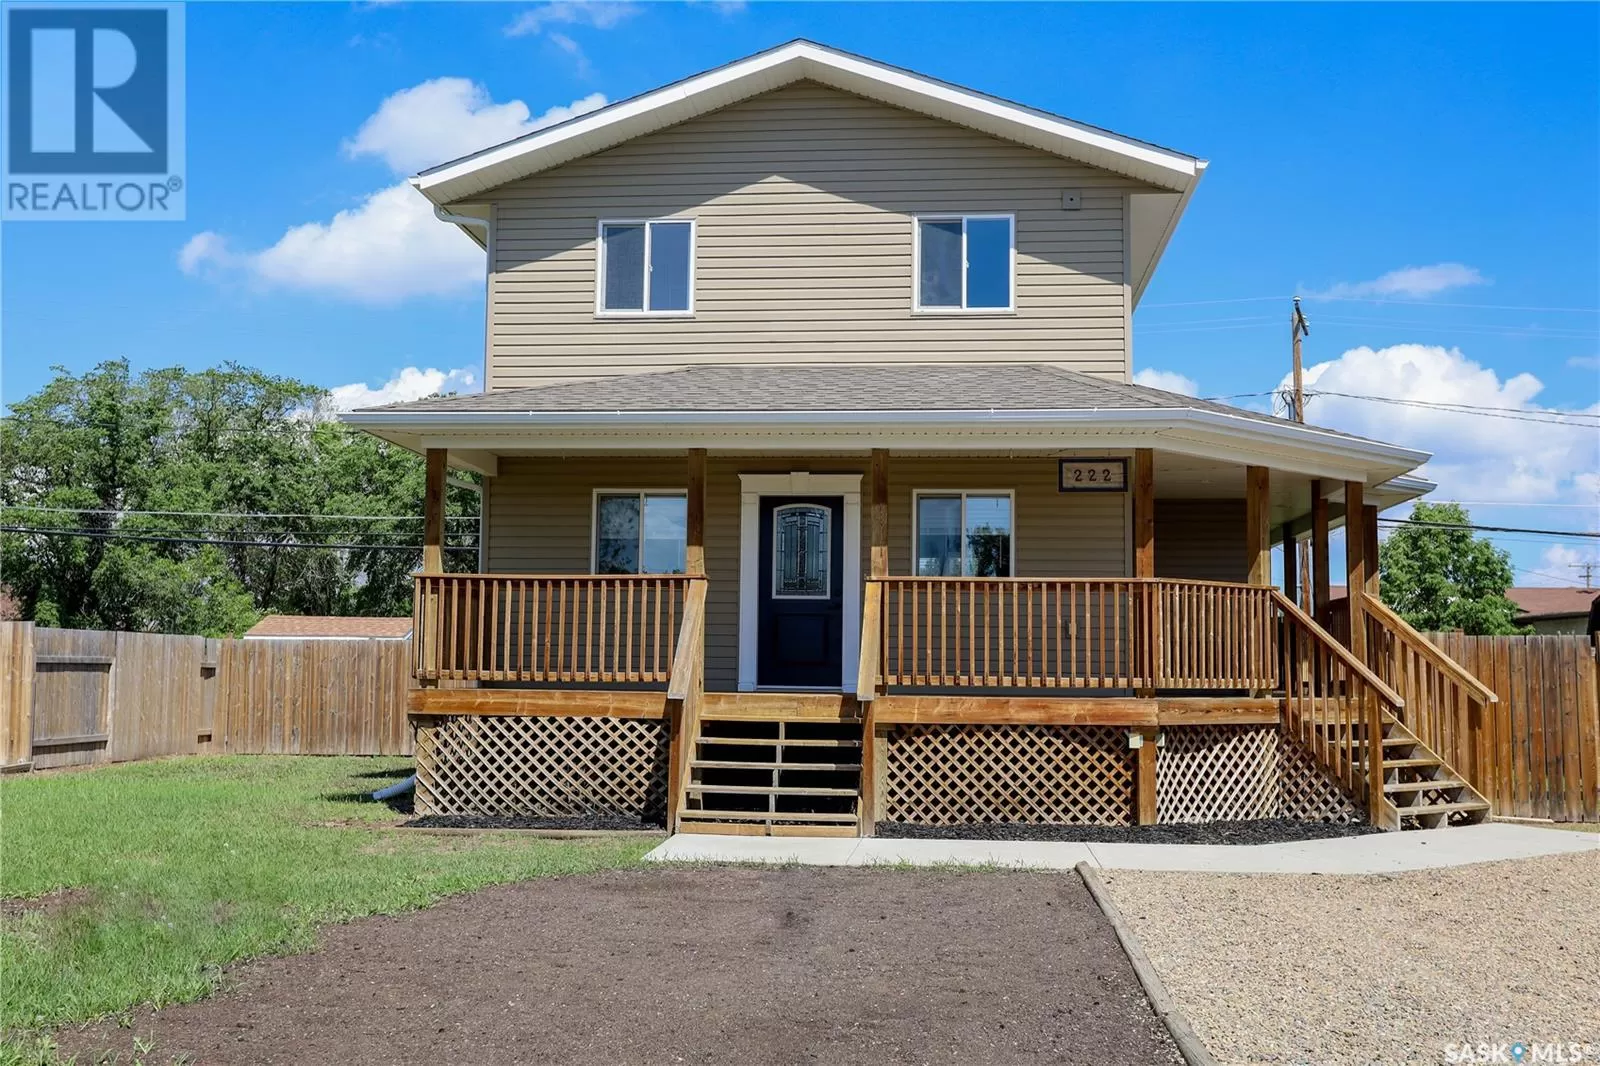 House for rent: 222 21st Street, Battleford, Saskatchewan S0M 0E0